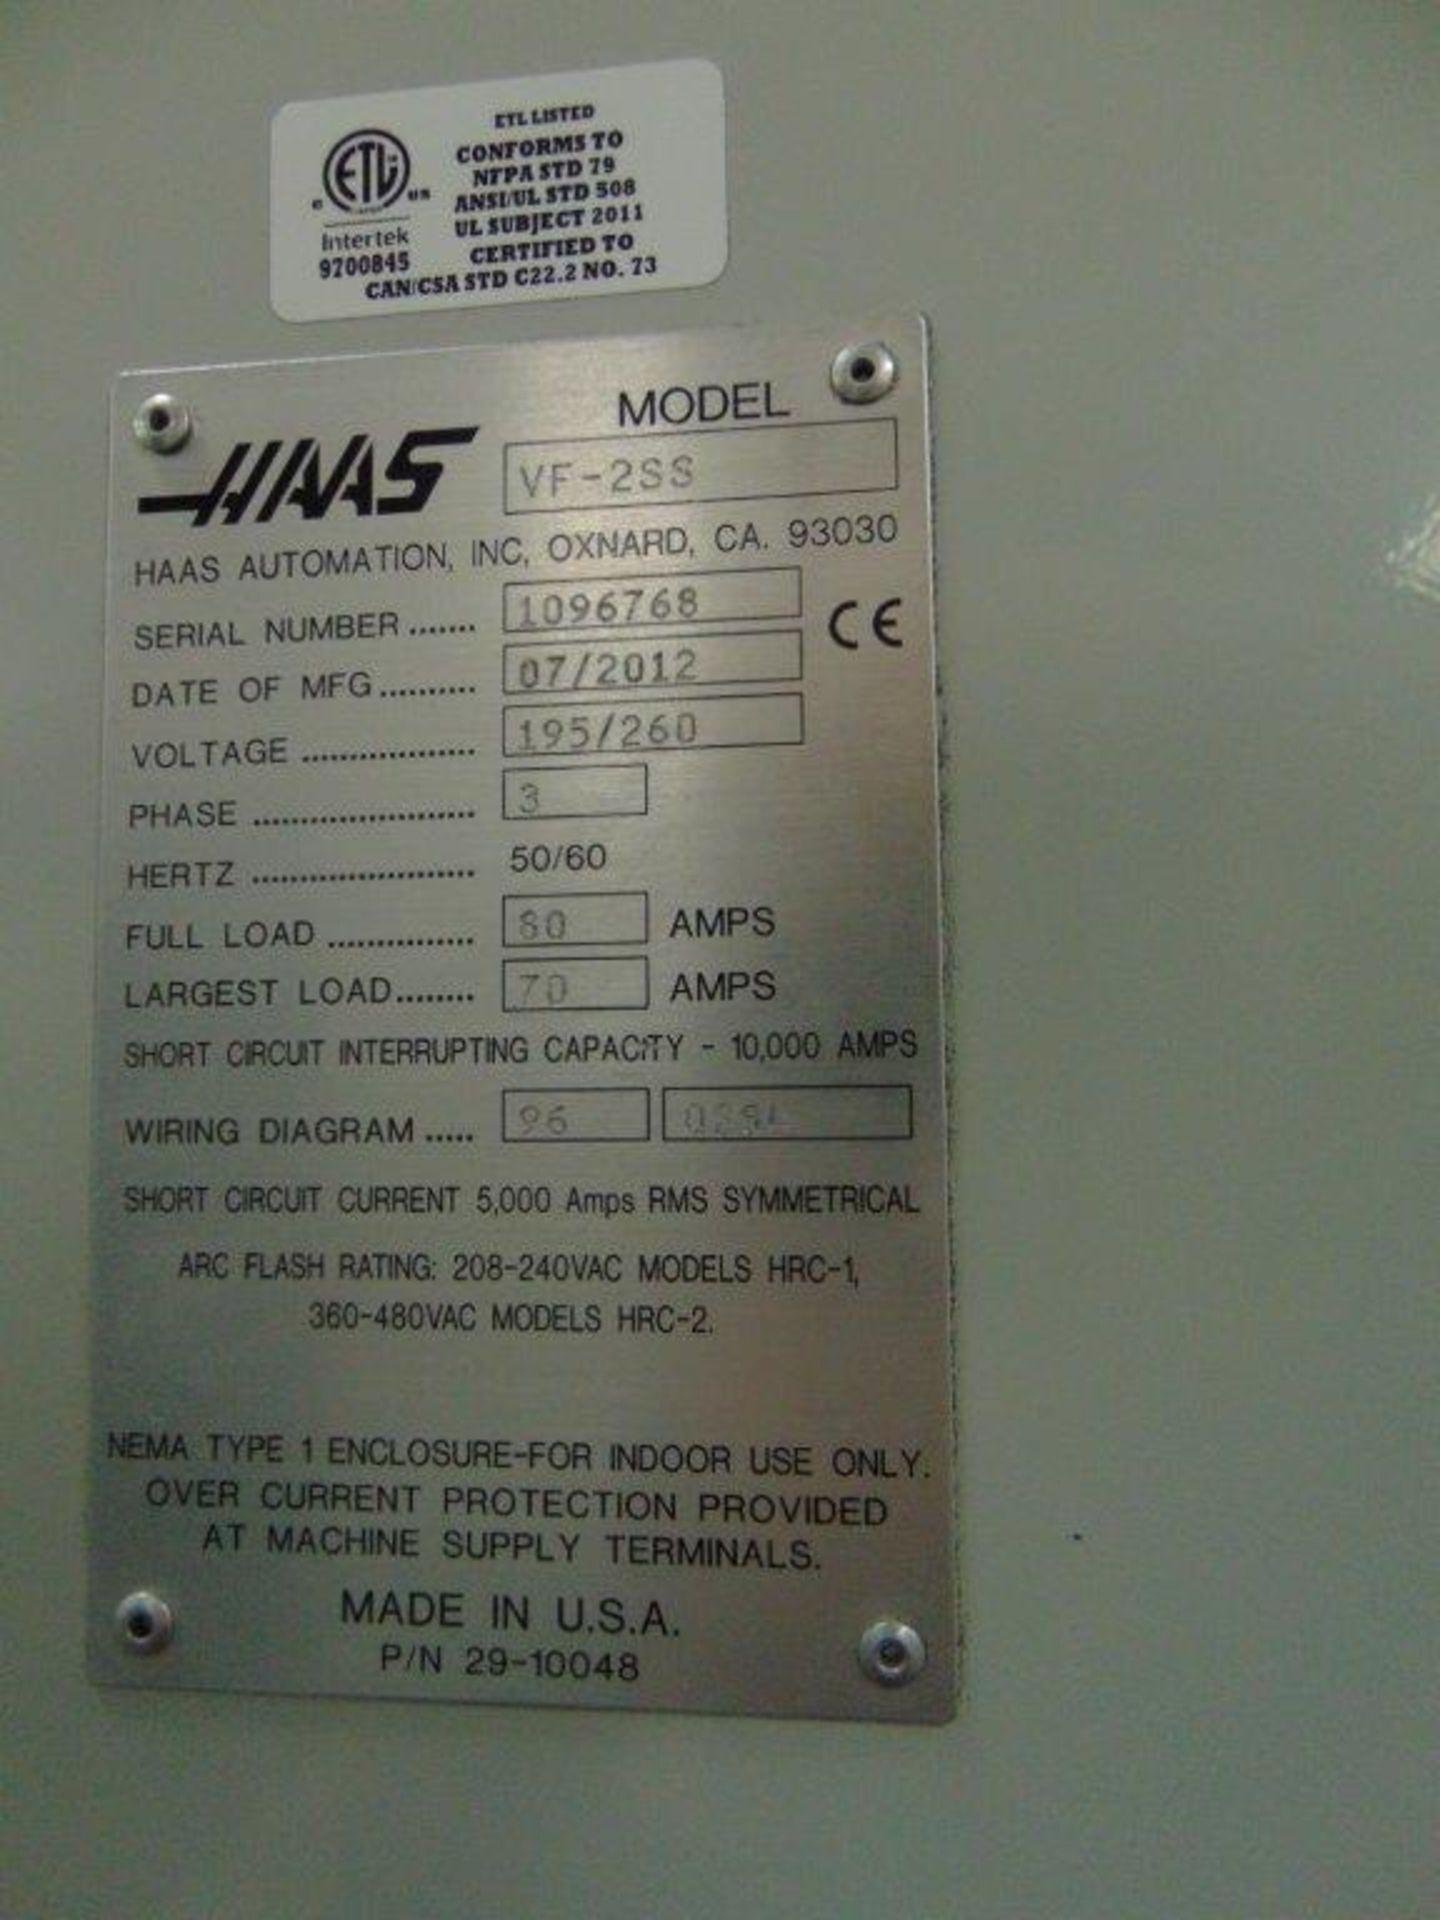 2012 HAAS VF-2SS S/N 1096768, 30” x 16” x 20” TRAVELS, 30HP, 12,000 RPM, USB PORT, RIGID TAPPING - Image 9 of 9